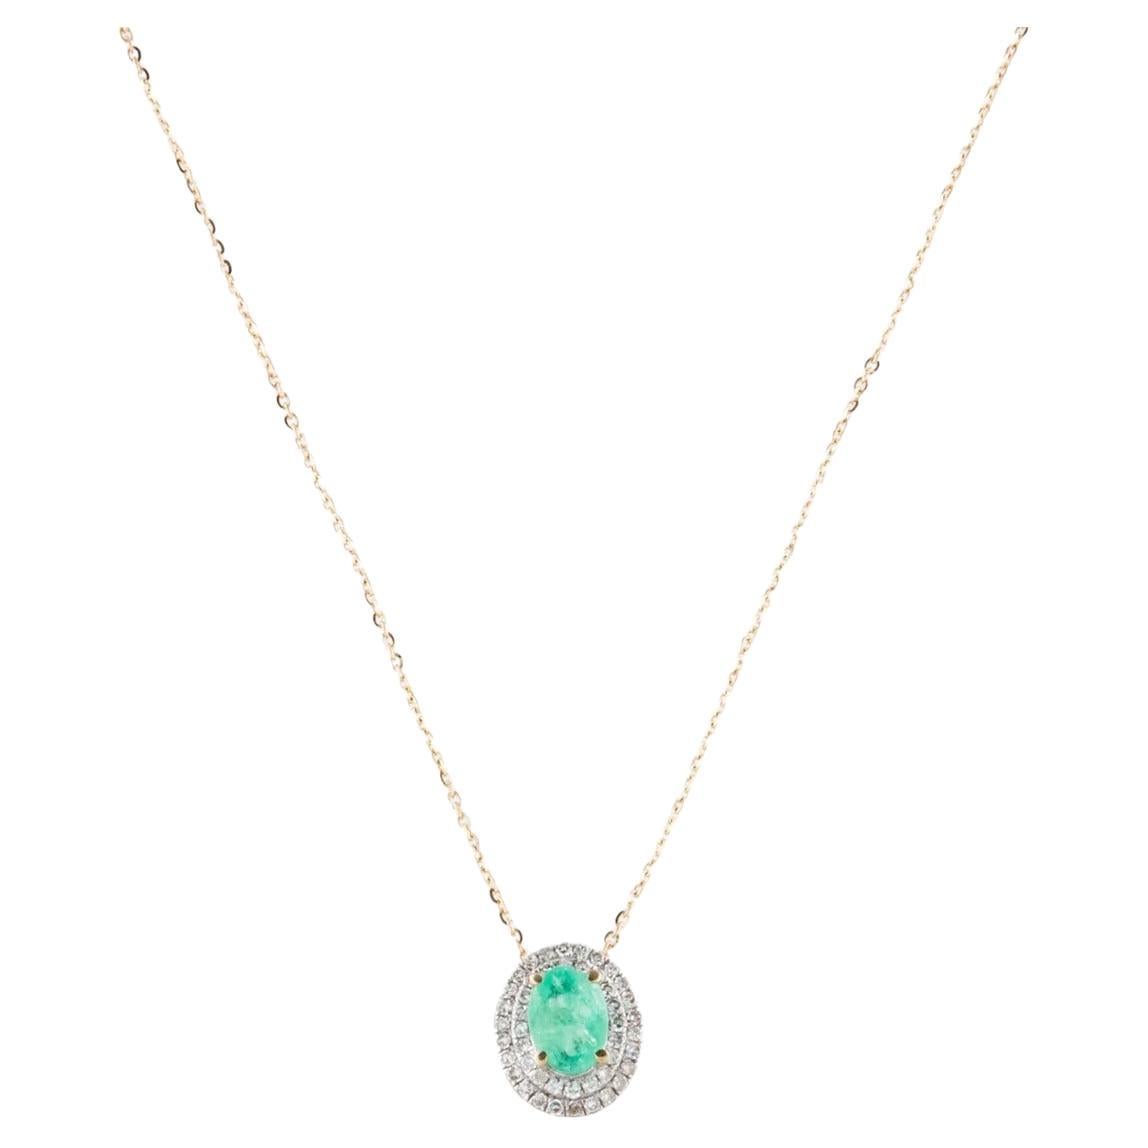 Designer 14K Emerald & Diamond Pendant Necklace, Gemstone Statement Jewelry